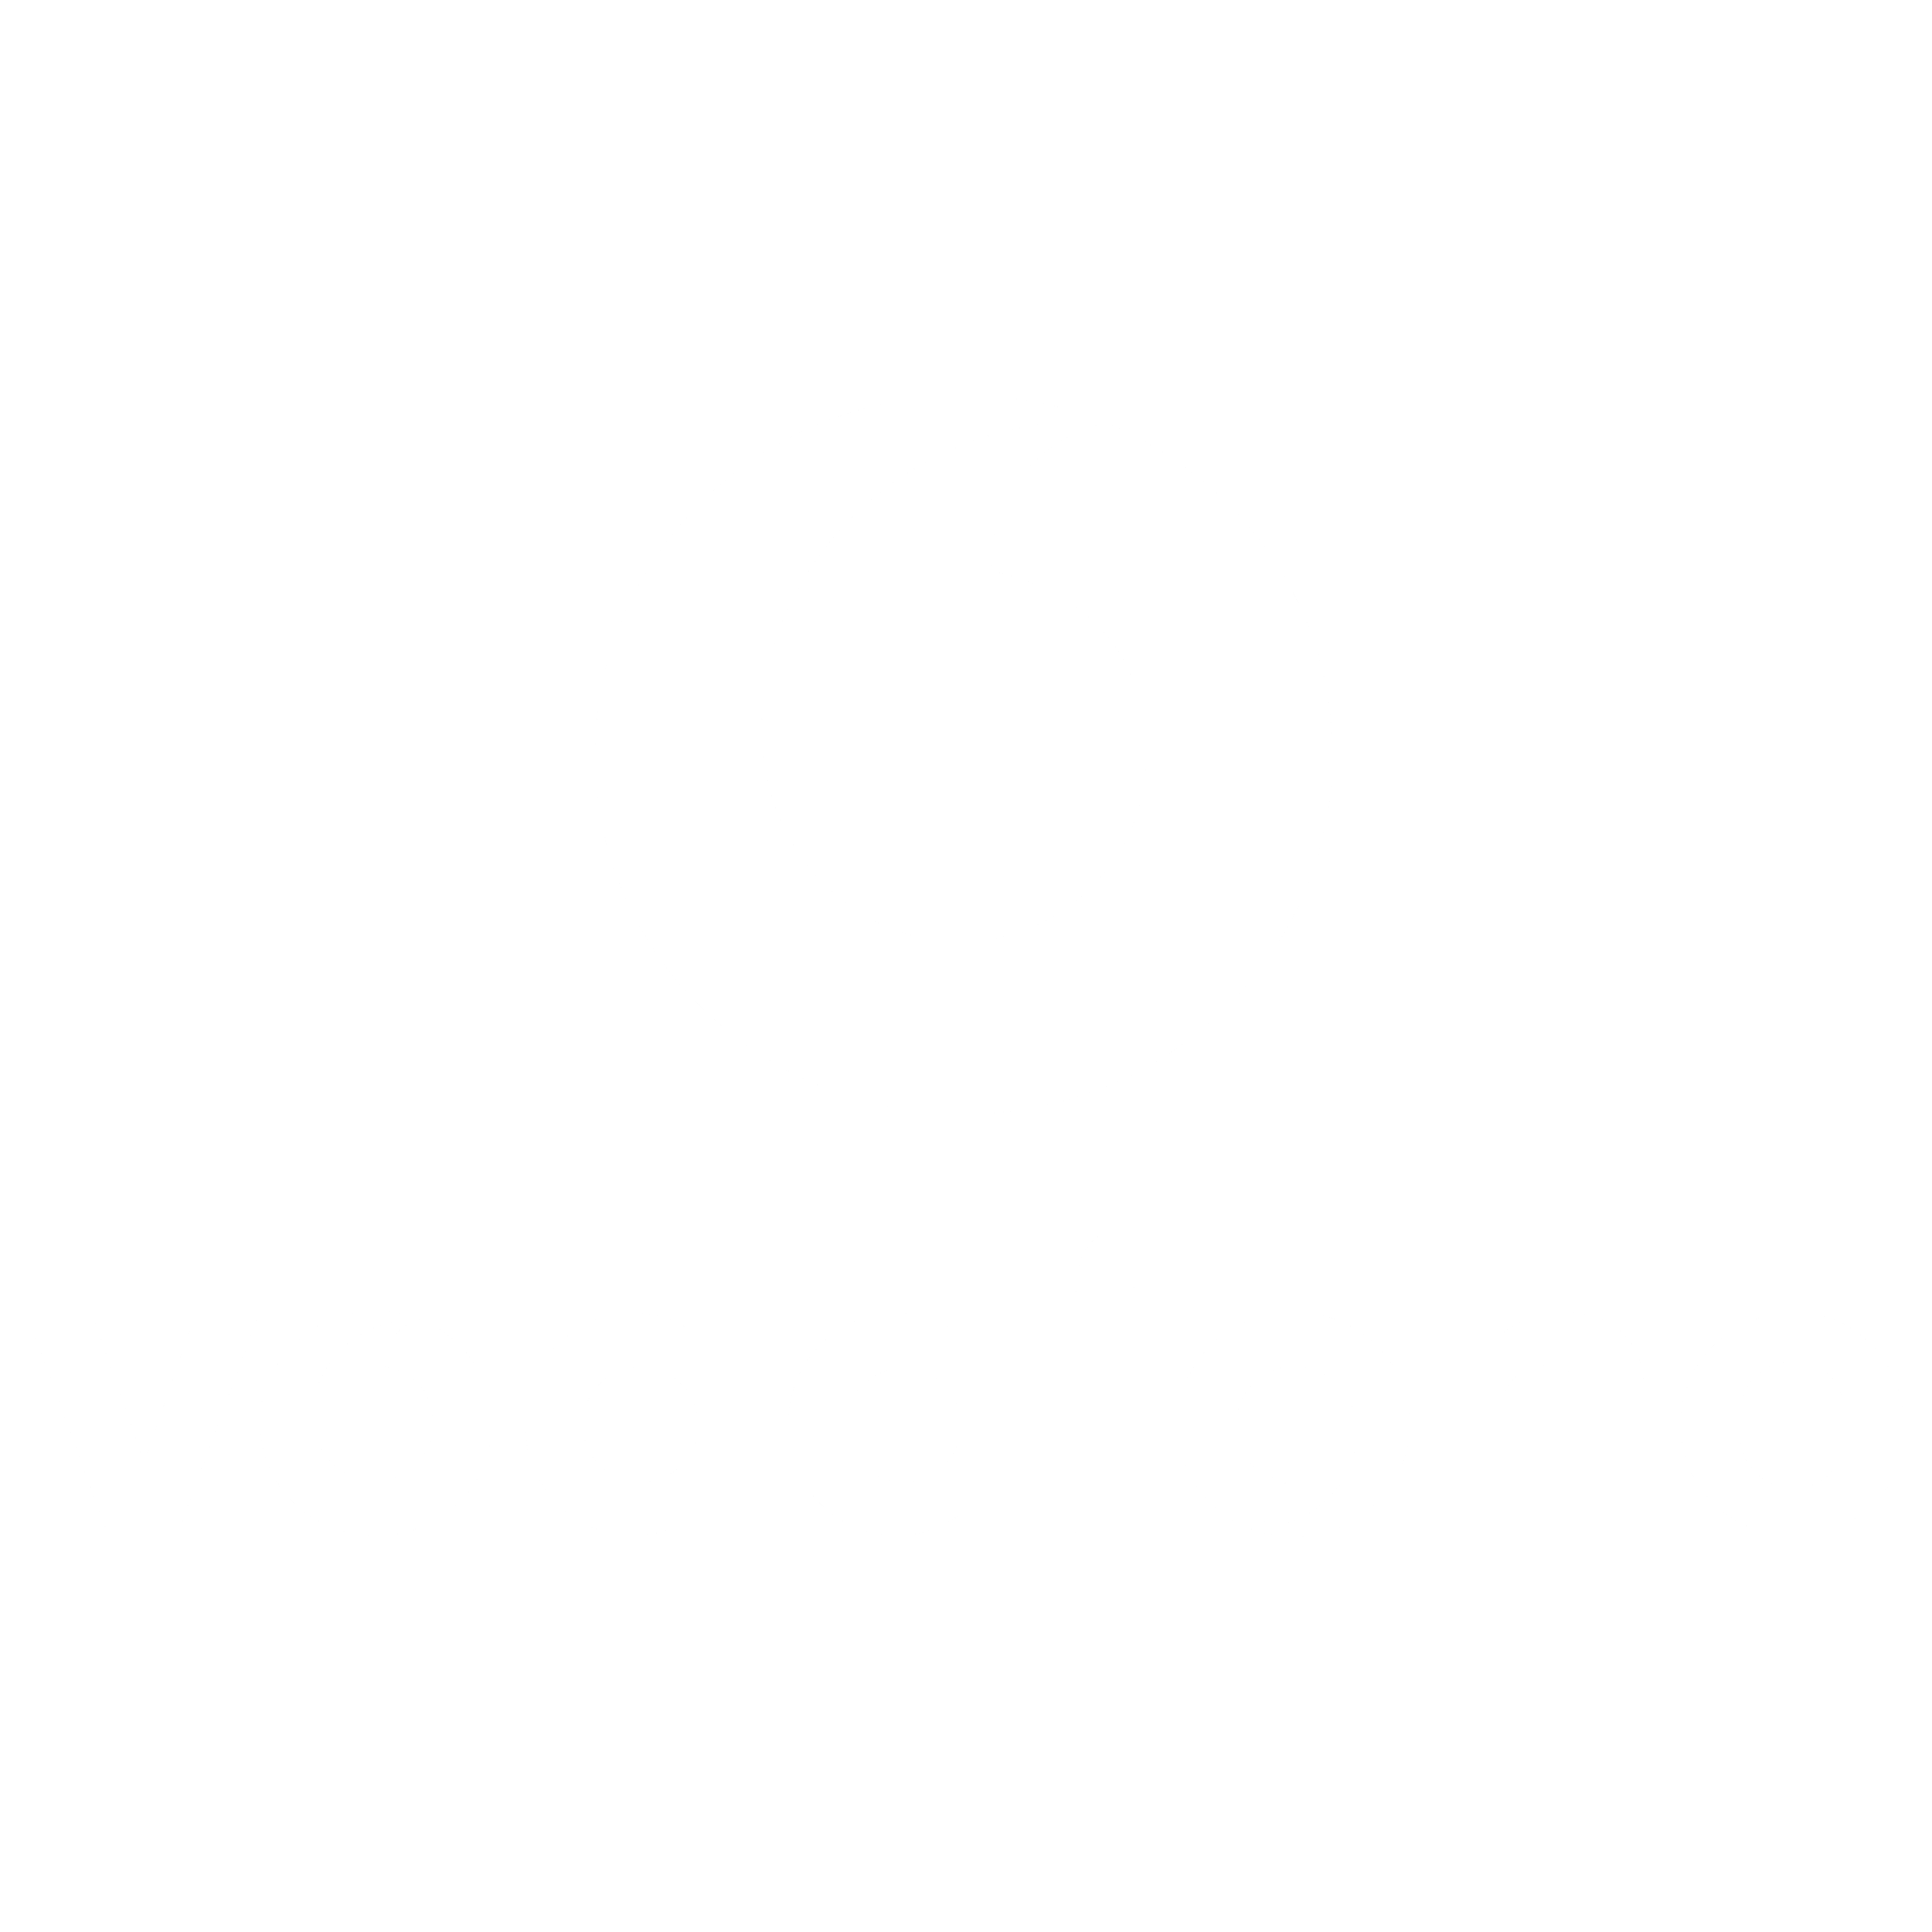 Vodafone Logo - Vodafone New 